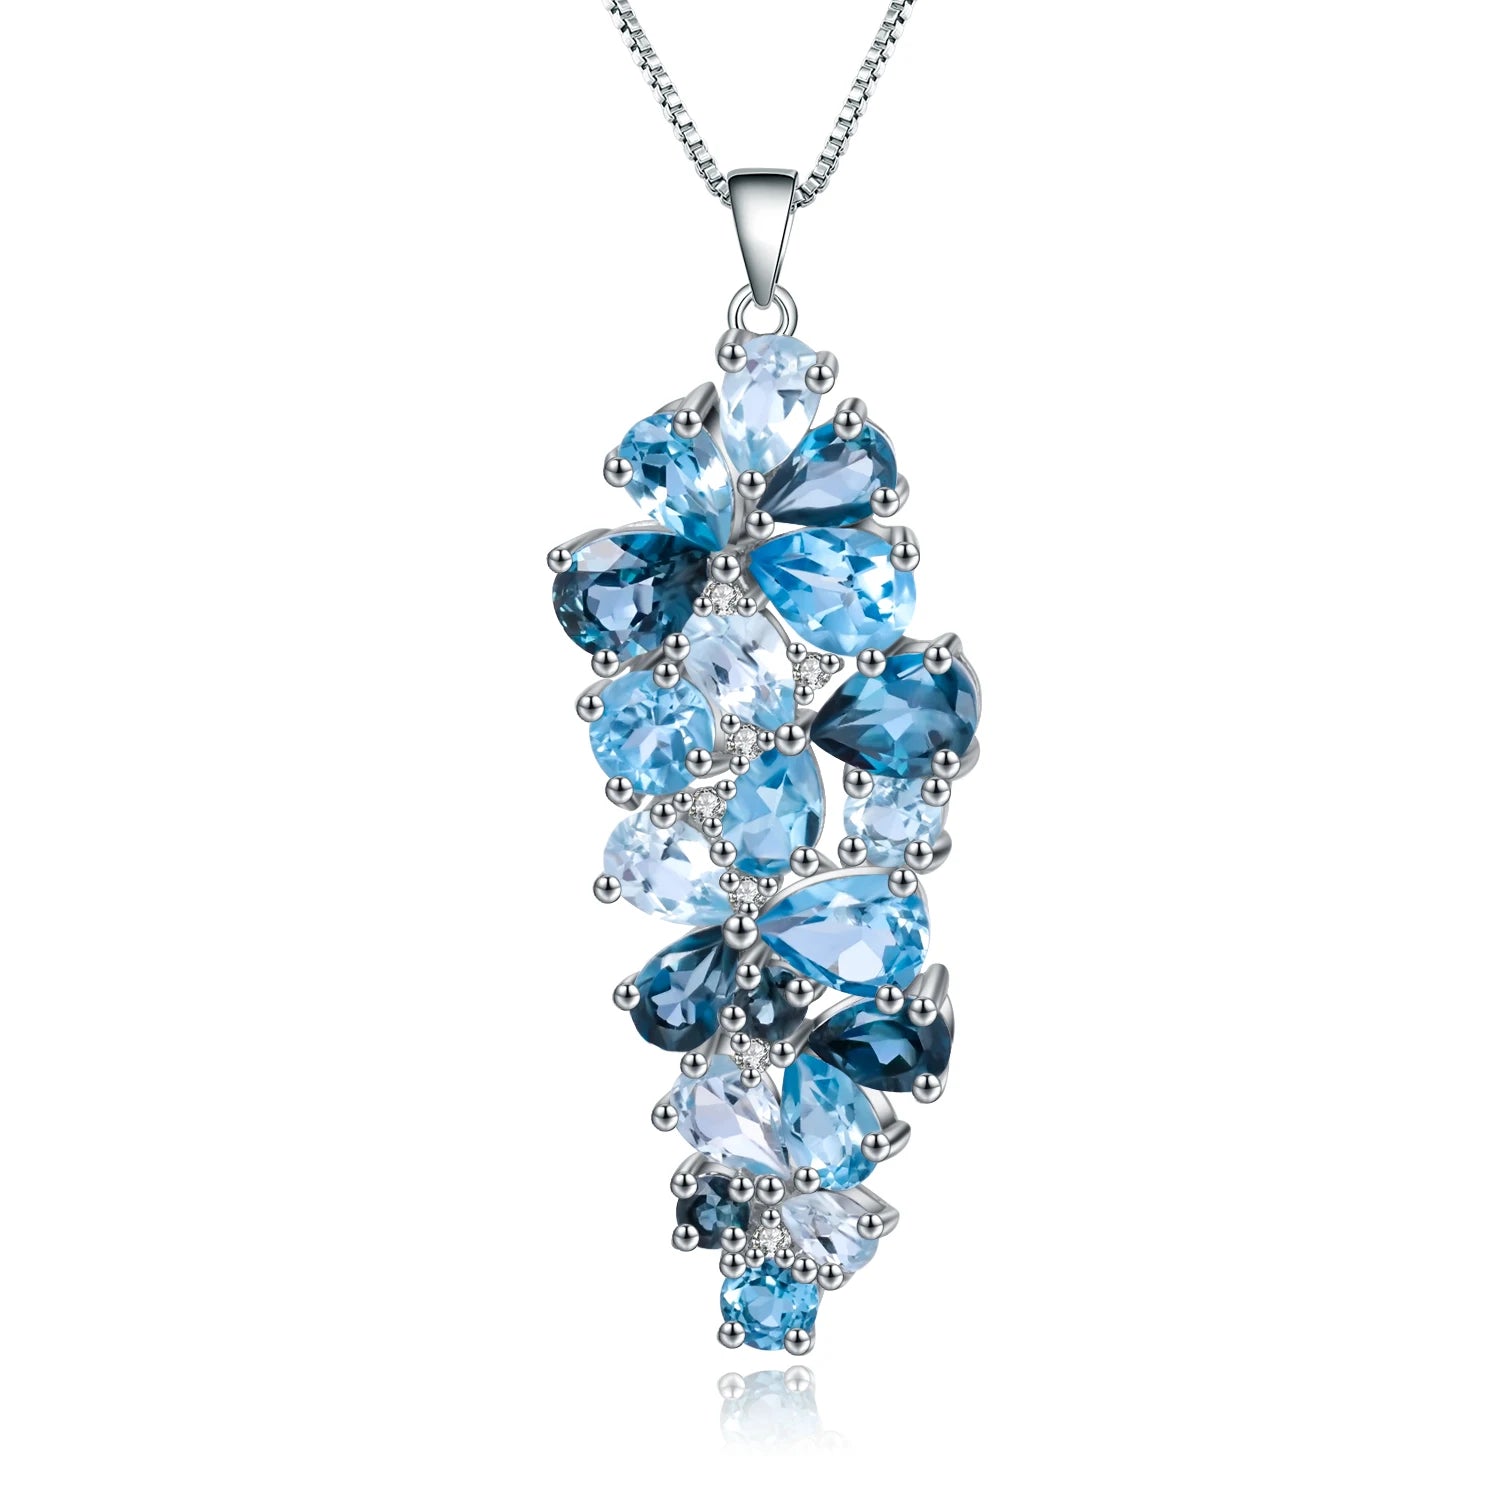 GEM'S BALLET London Blue Topaz Swiss Blue Topaz Sky Blue Topaz Mix Gemstone Pendants For Women Gift Luxury Jewelry Accessories MIX CHINA